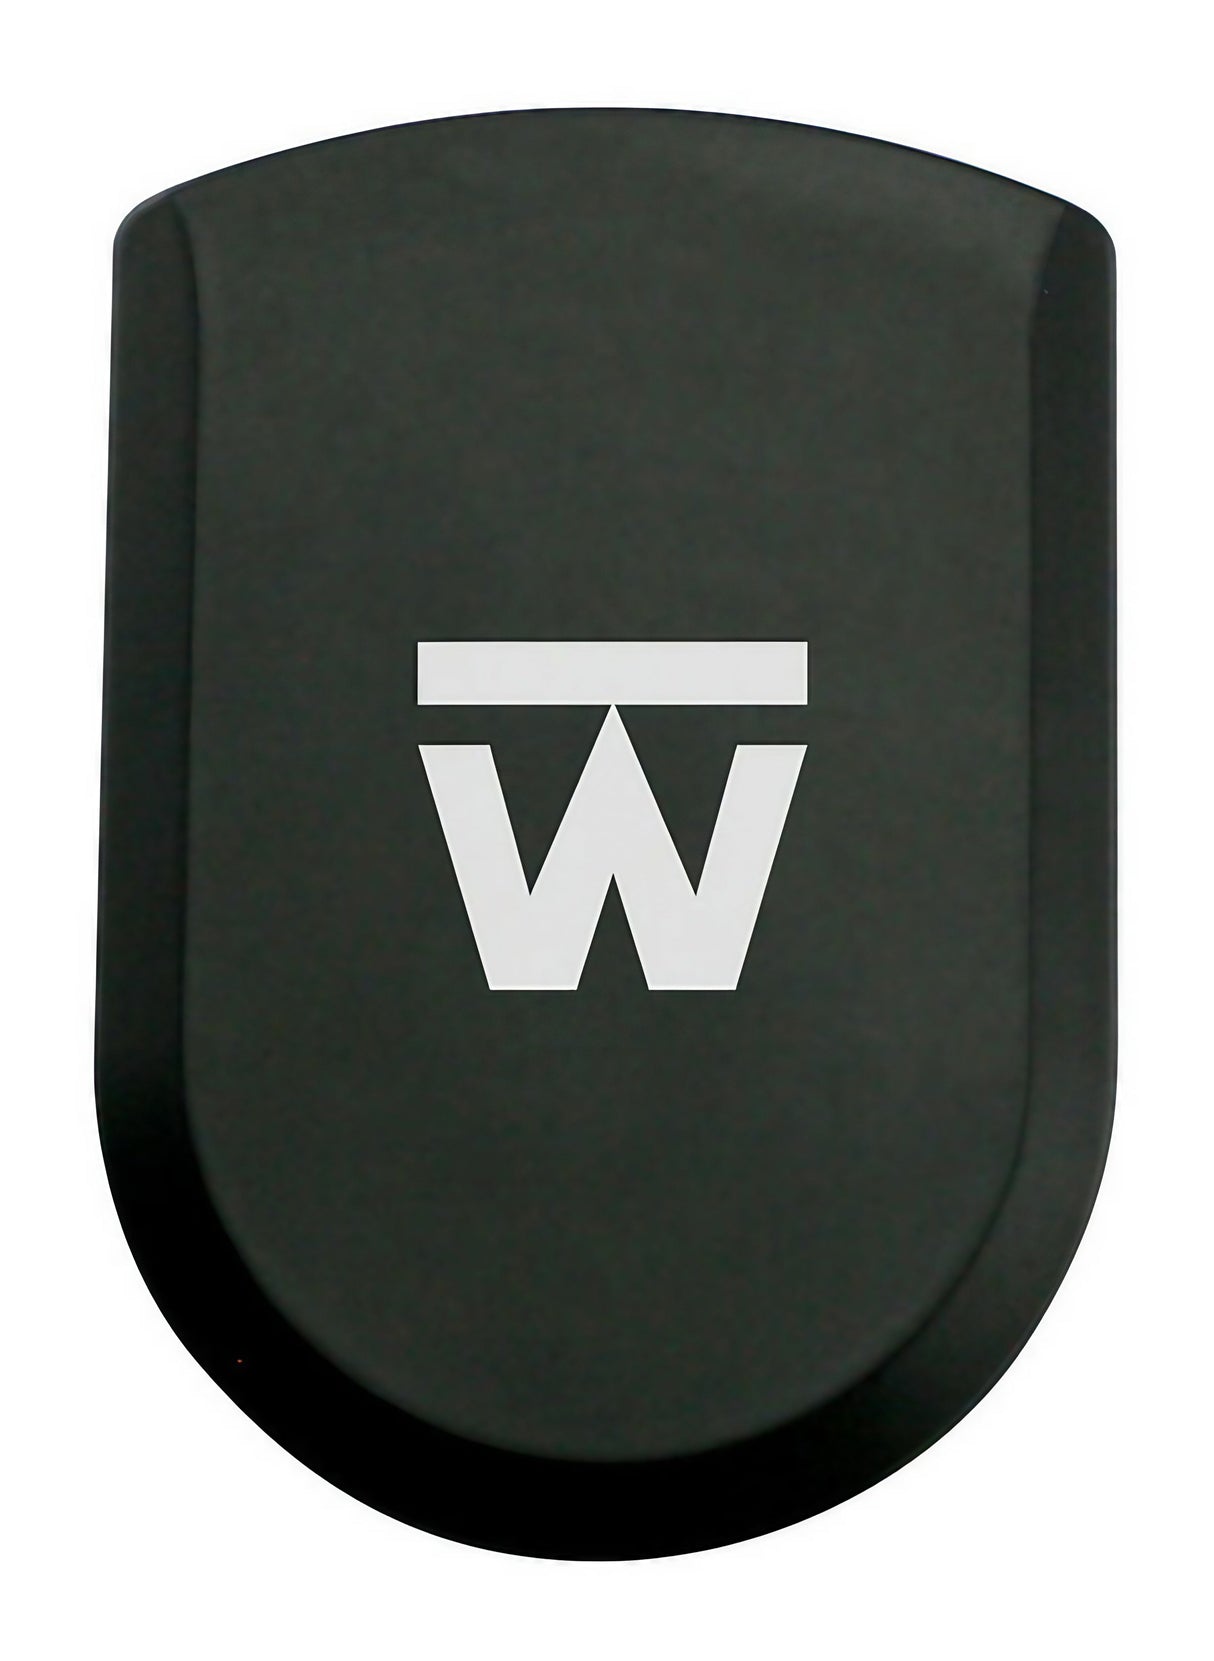 Truweigh Lynx Digital Mini Scale in black, portable compact design, top view